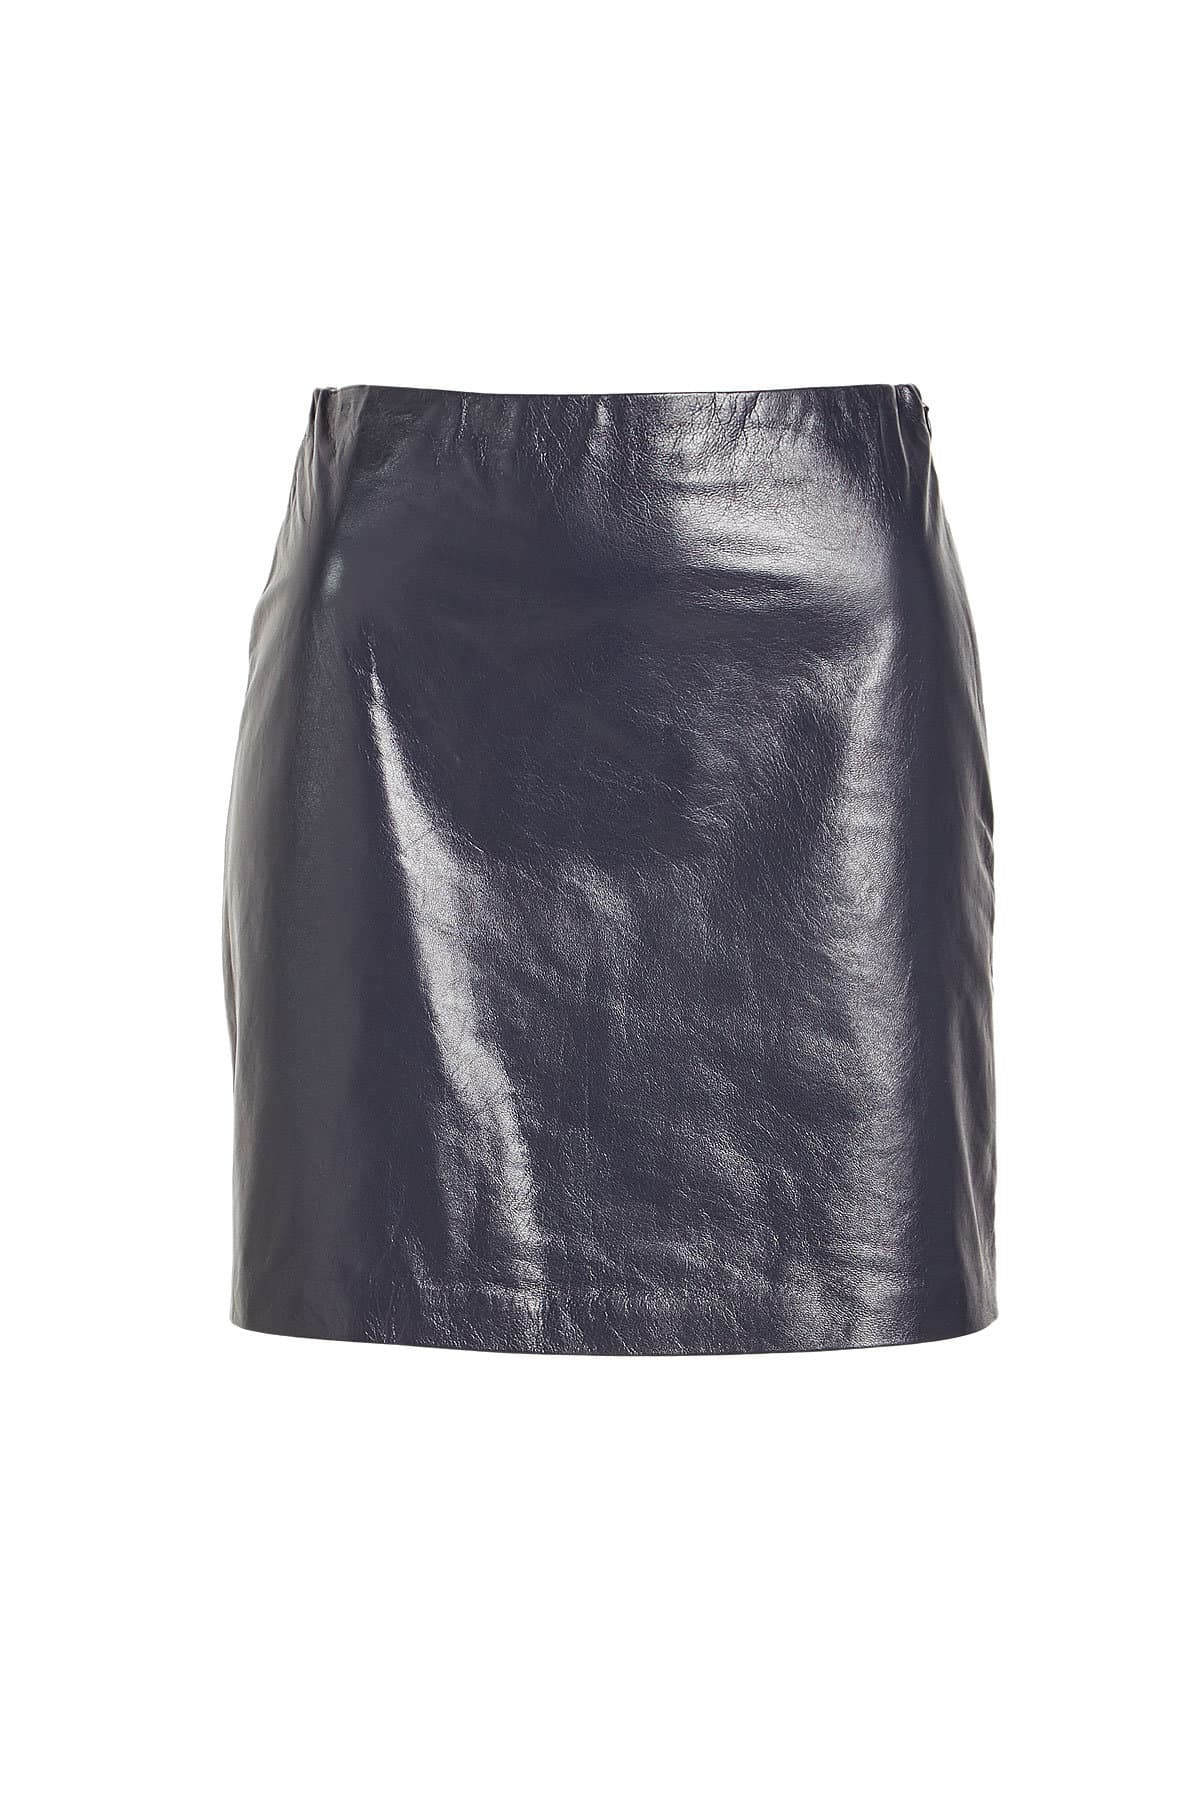 Theory - Micro Mini Leather Skirt